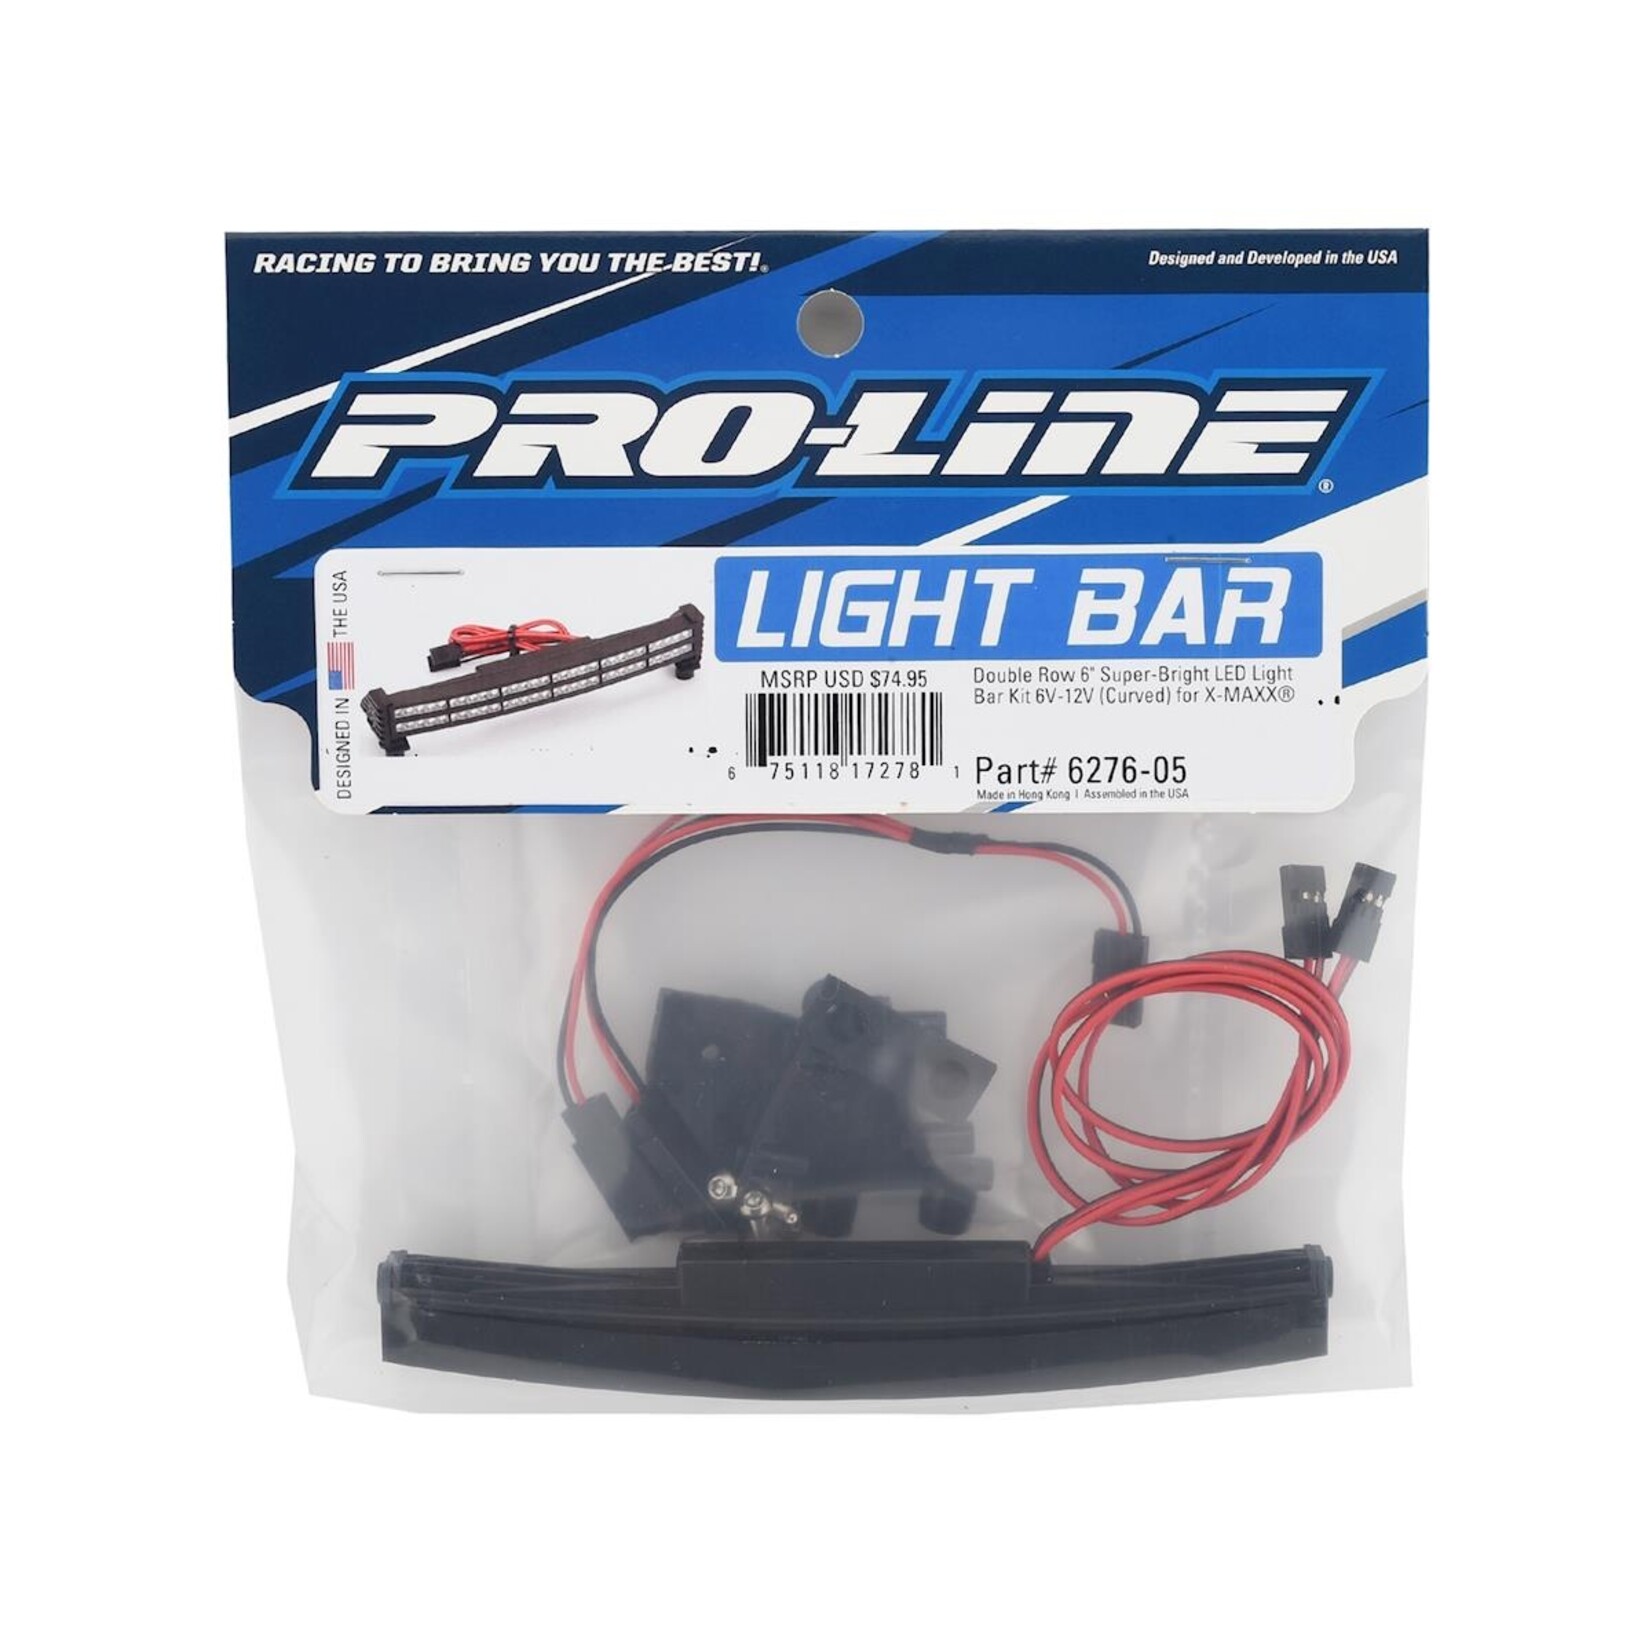 Pro-Line Pro-Line 6" Curved Super-Bright LED Light Bar Kit (6V-12V) #6276-05